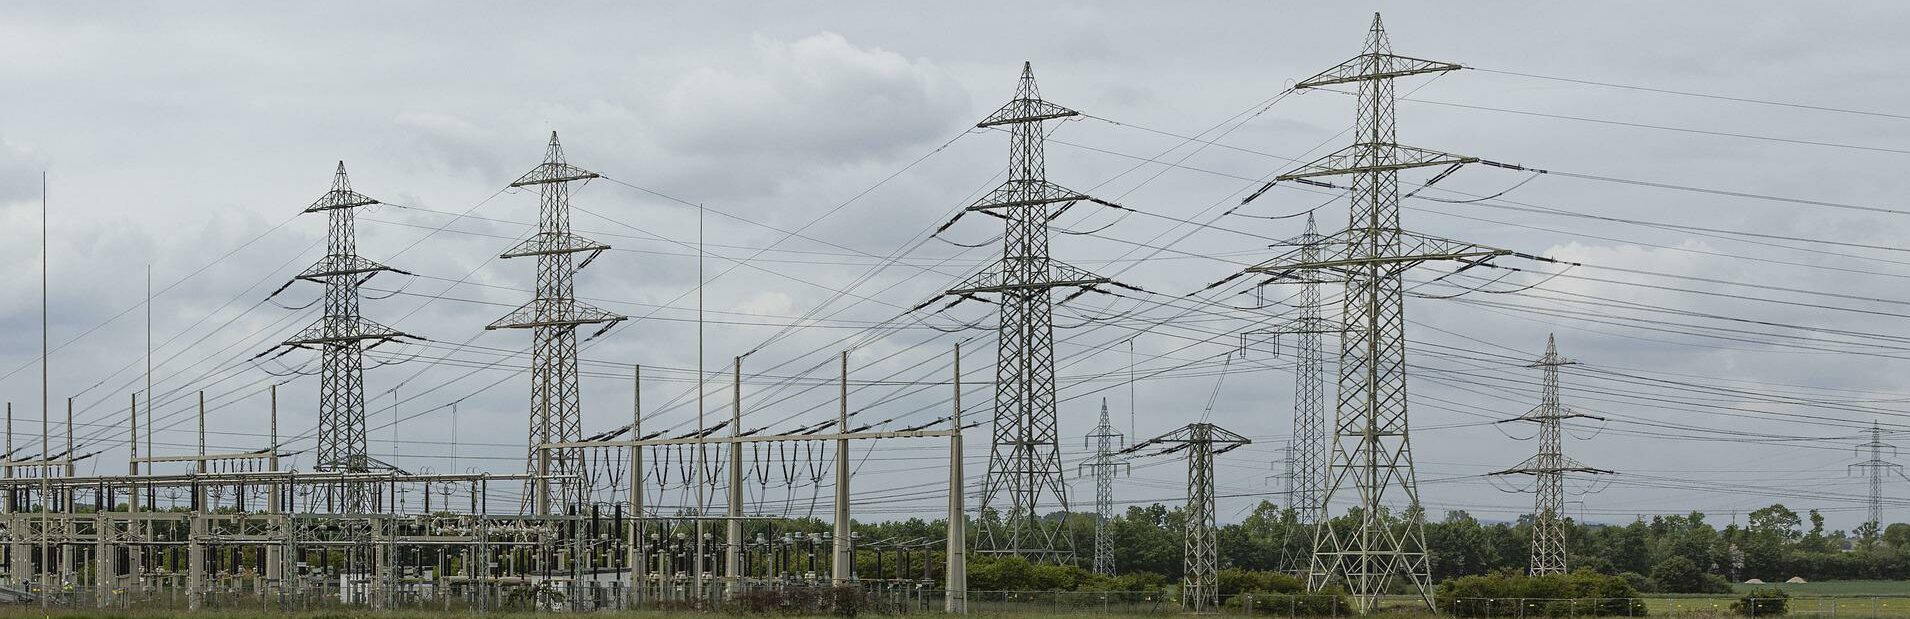 Power substation